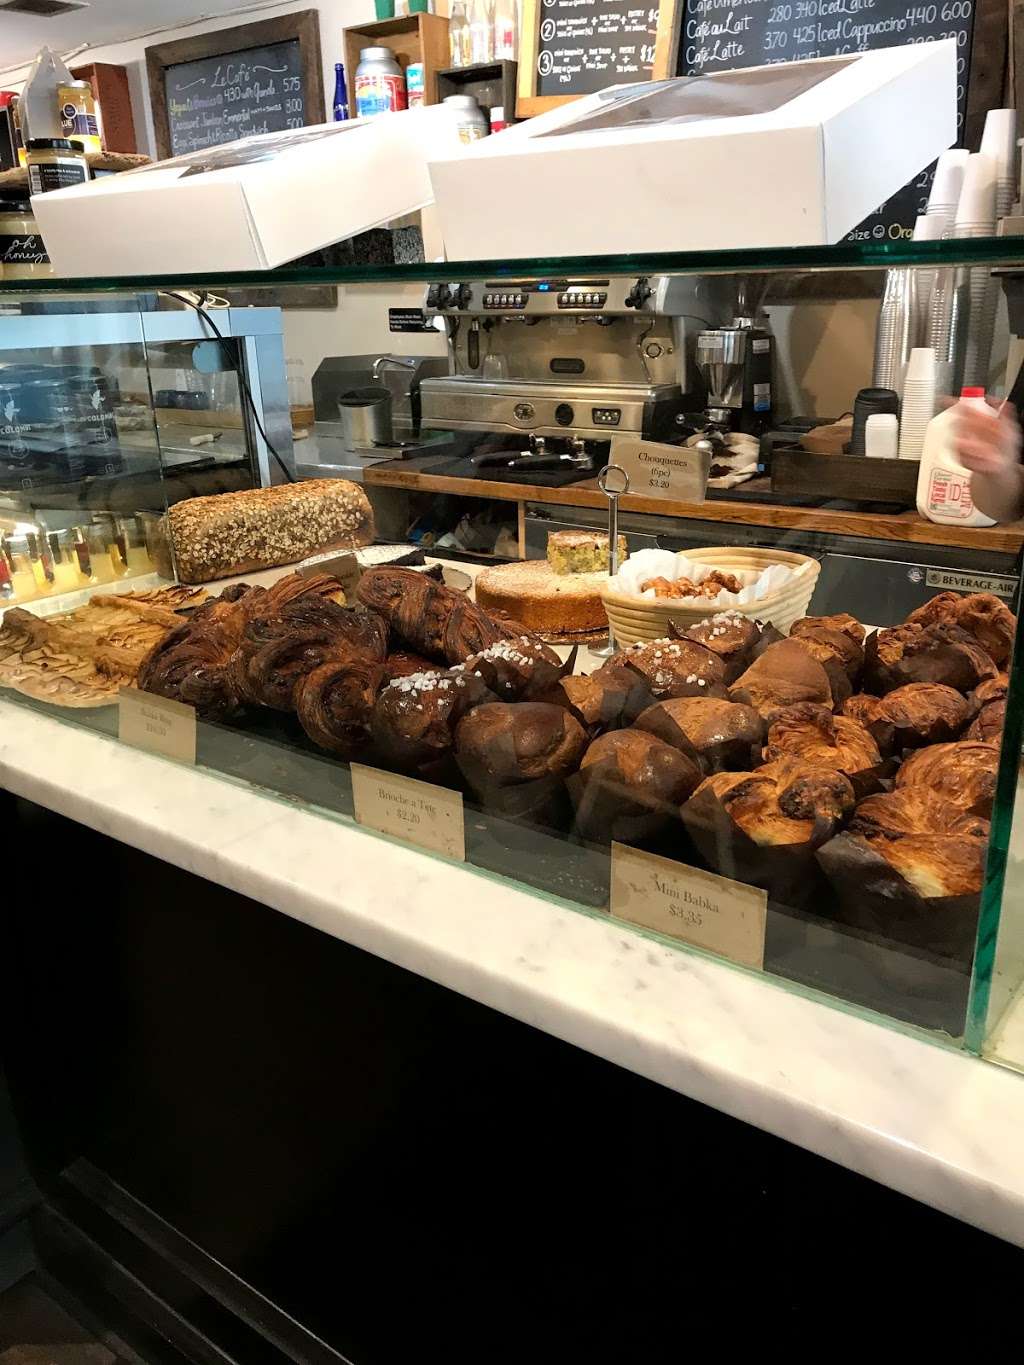 Choc O Pain French Bakery and Café | Photo 9 of 10 | Address: 157 1st St, Hoboken, NJ 07030, USA | Phone: (201) 710-5175